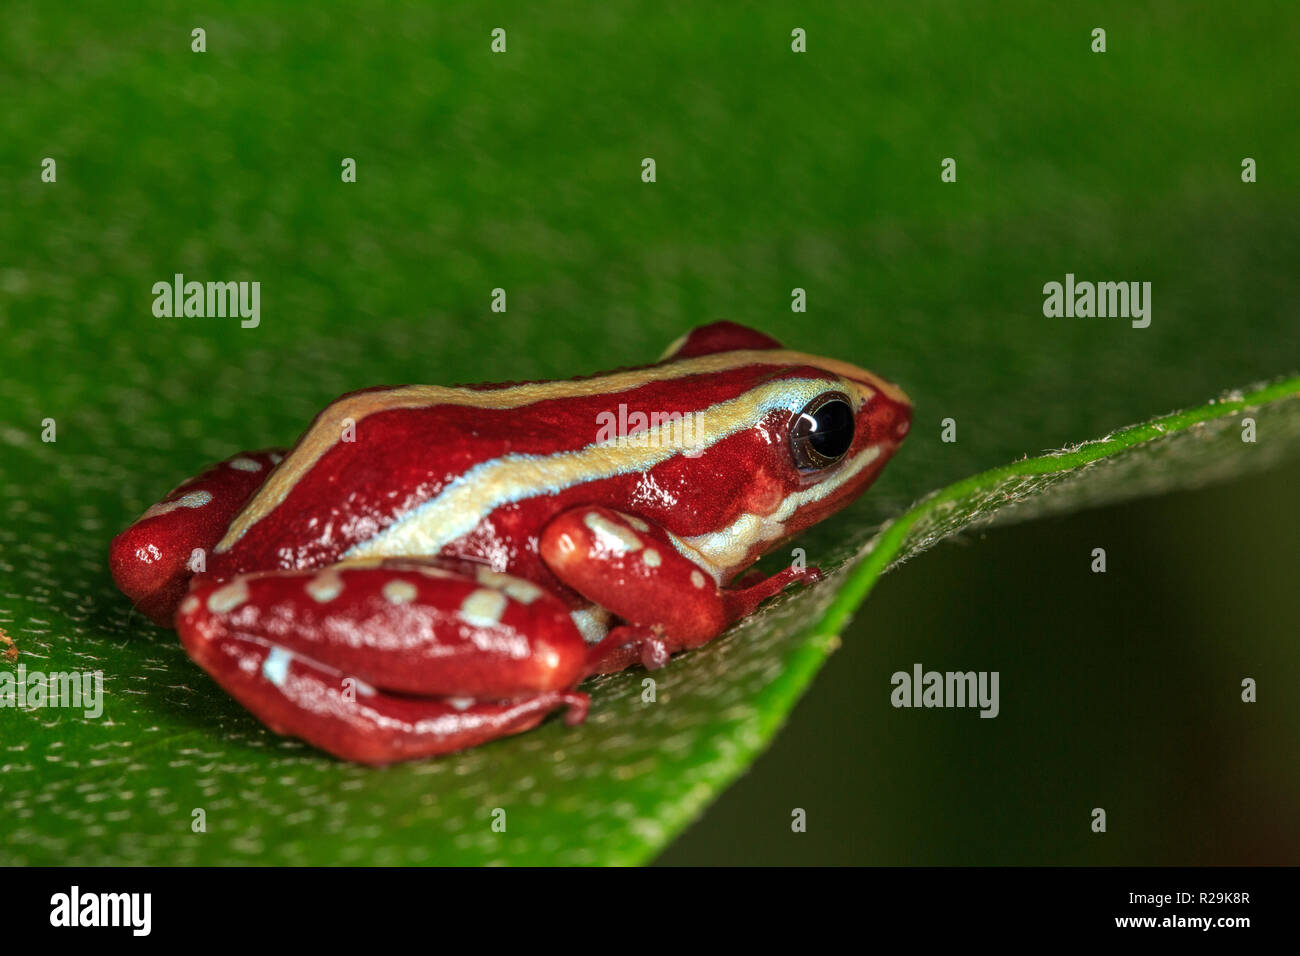 Grenouille poison fantasmatique fantasmatique ou flèche-poison (grenouille Epipedobates tricolor) on leaf Banque D'Images